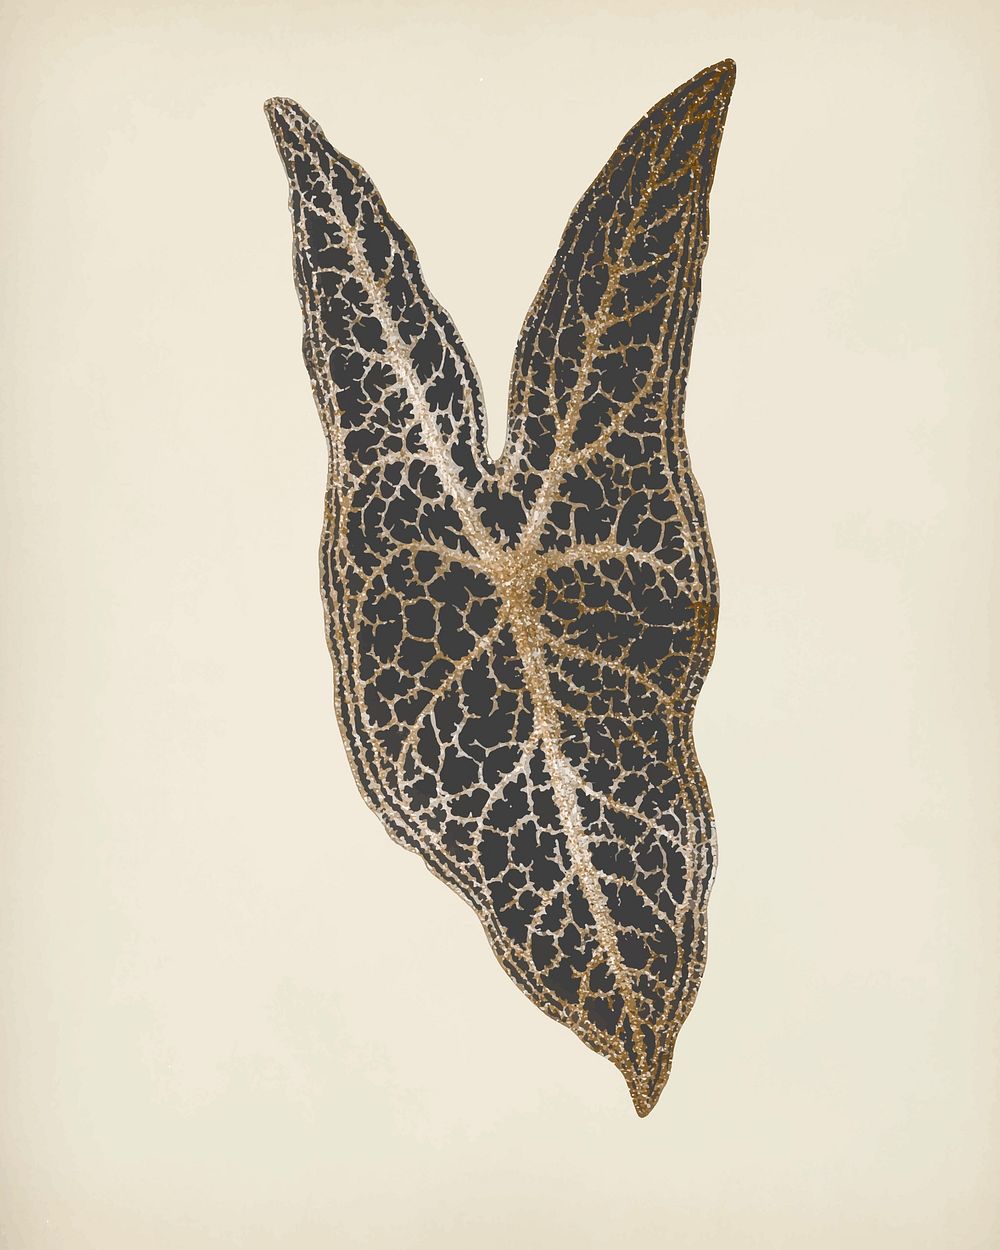 Caladium Belleymel, engraved Heart of Jesus leaf vintage vector, remix from original artwork of Benjamin Fawcett.